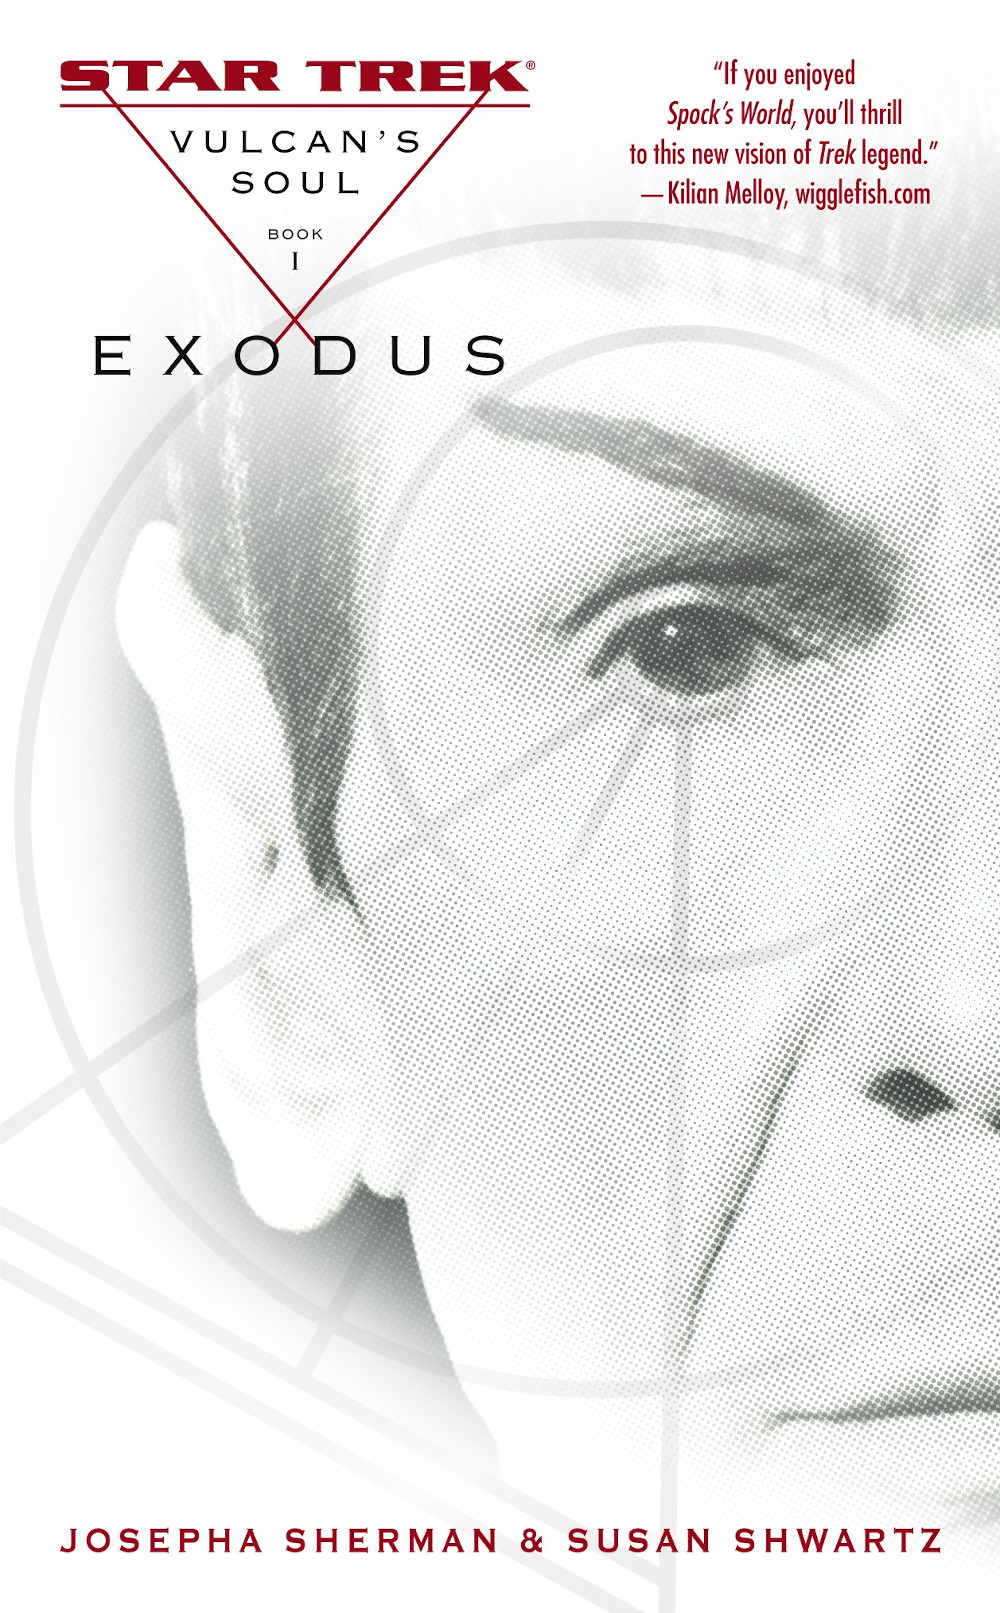 Vulcan's Soul, Book One: Exodus (Jul 2004)